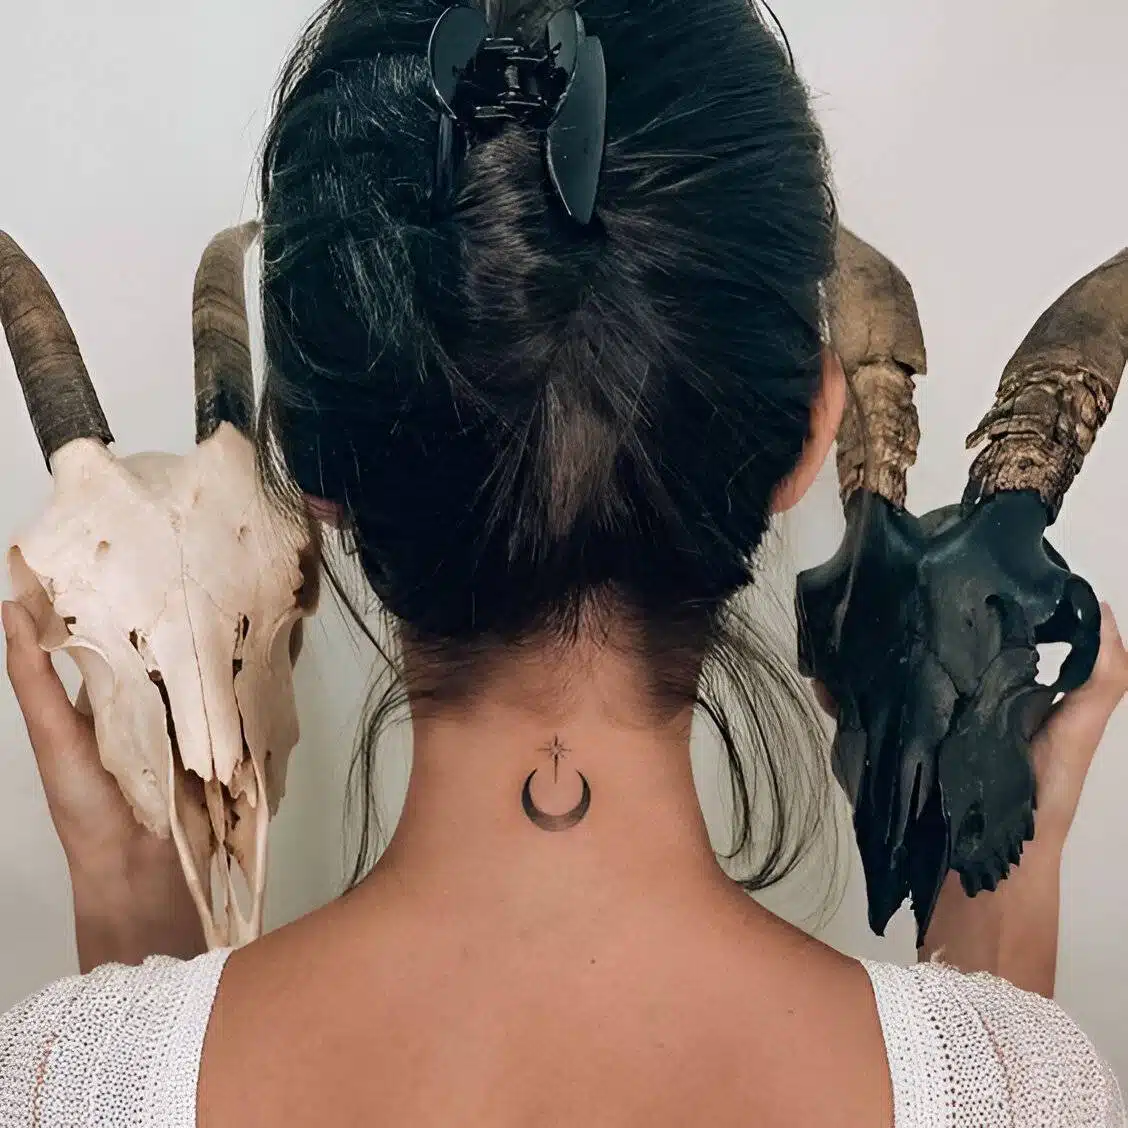 25 Mini Moon Tattoos To Boost Your Feminine Power - 183